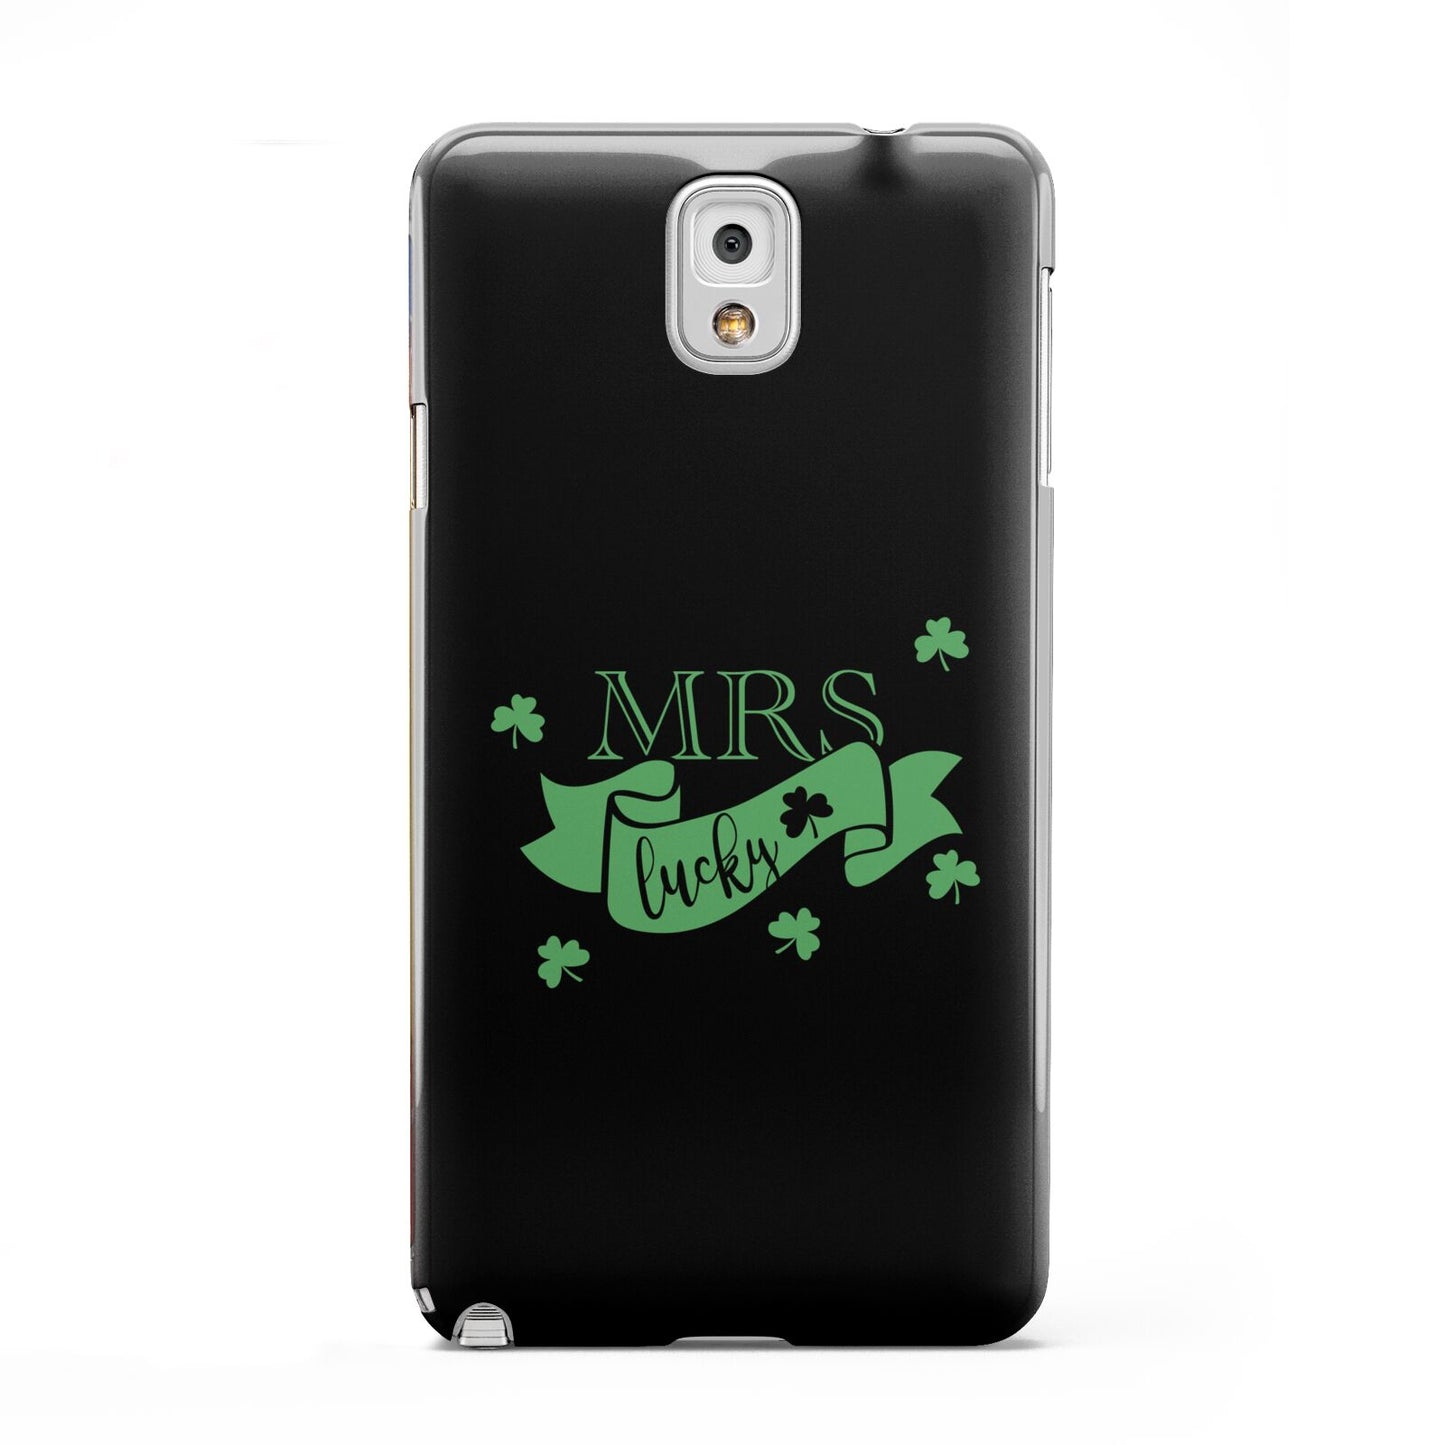 Mrs Lucky Samsung Galaxy Note 3 Case